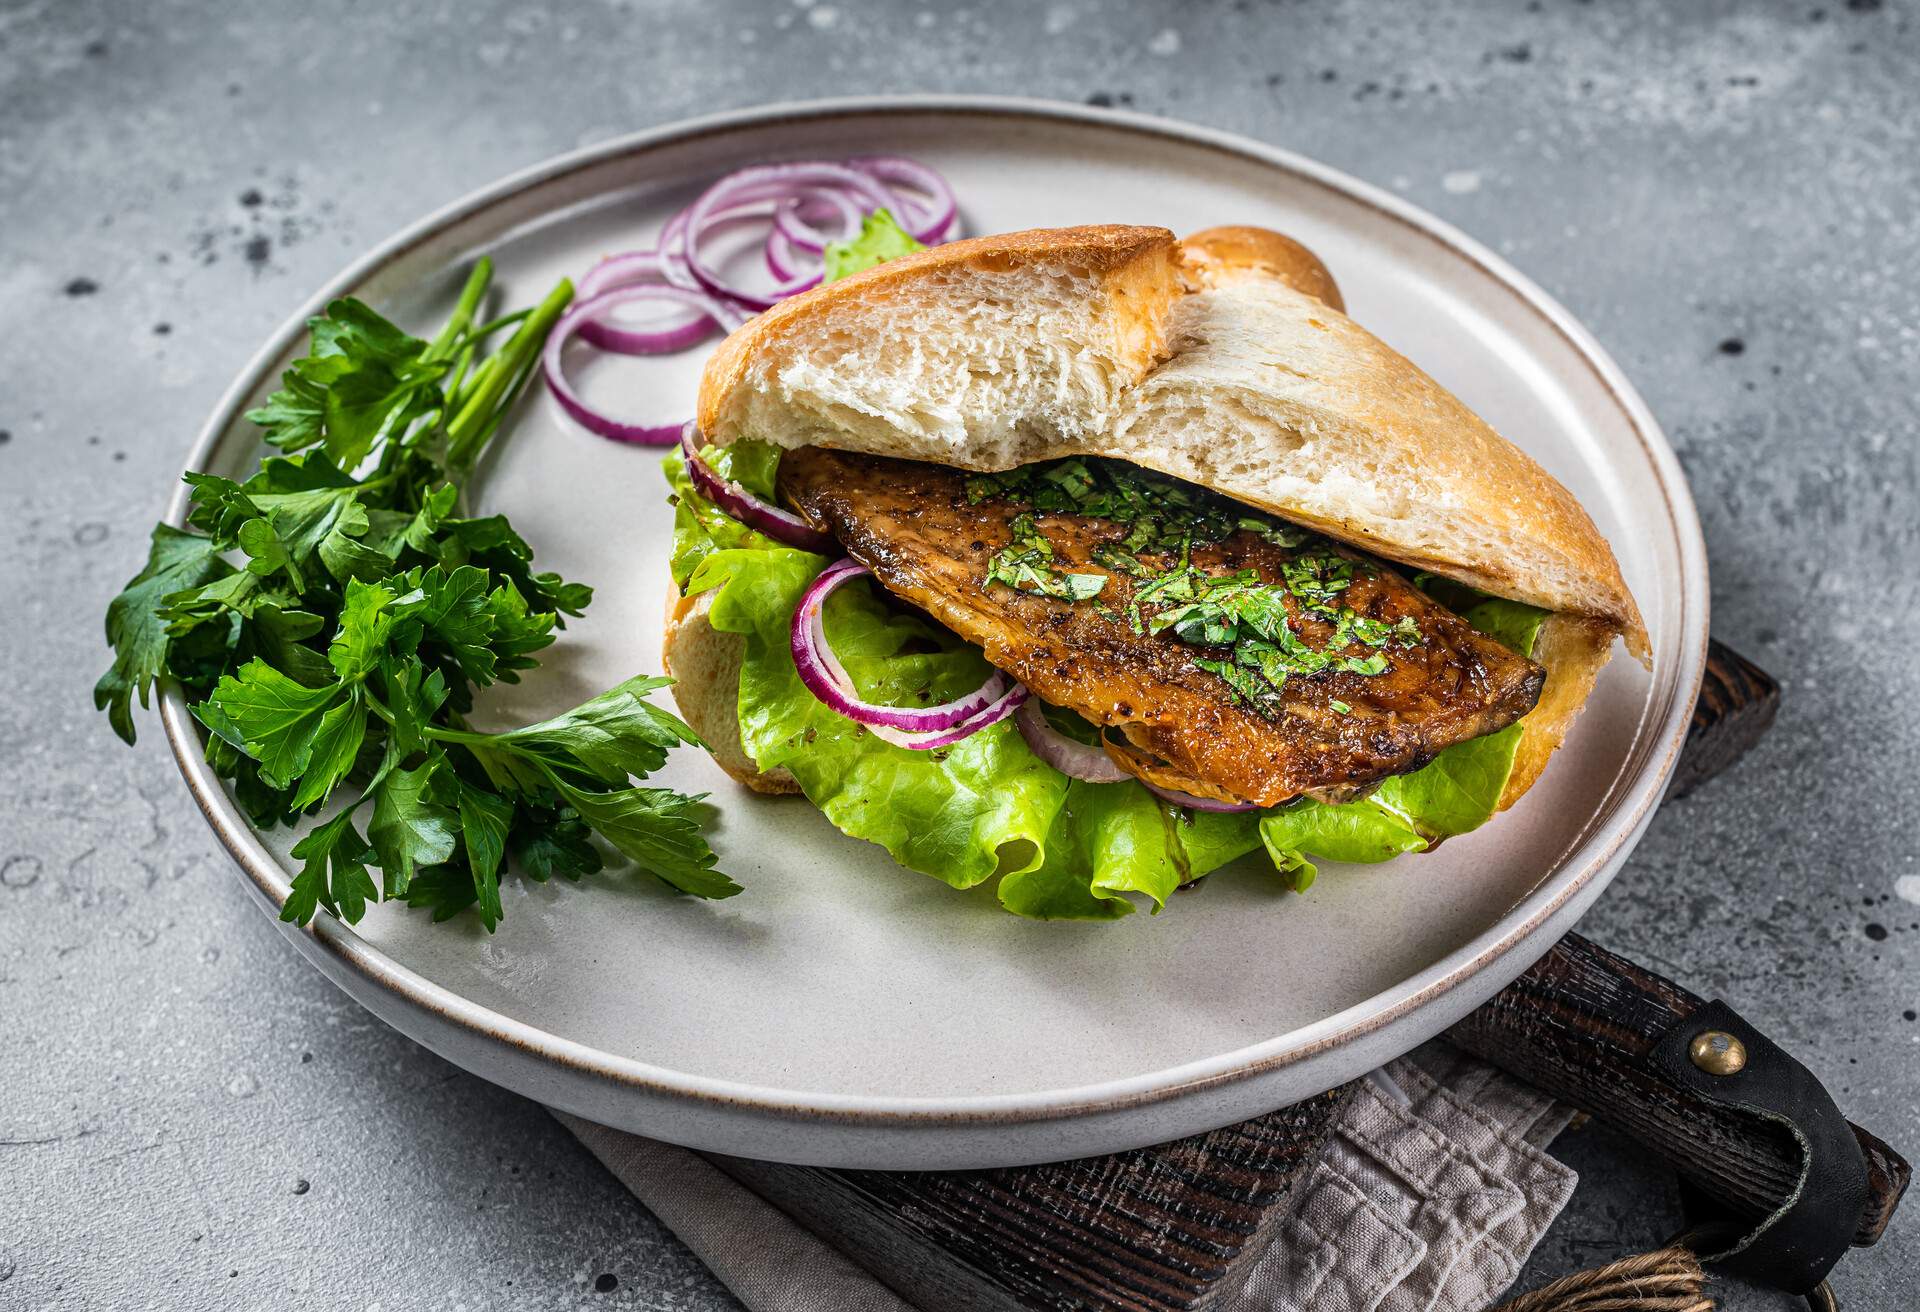 Balik Ekmek Turkish fish sandwich with grilled mackerel fillet in a bun.